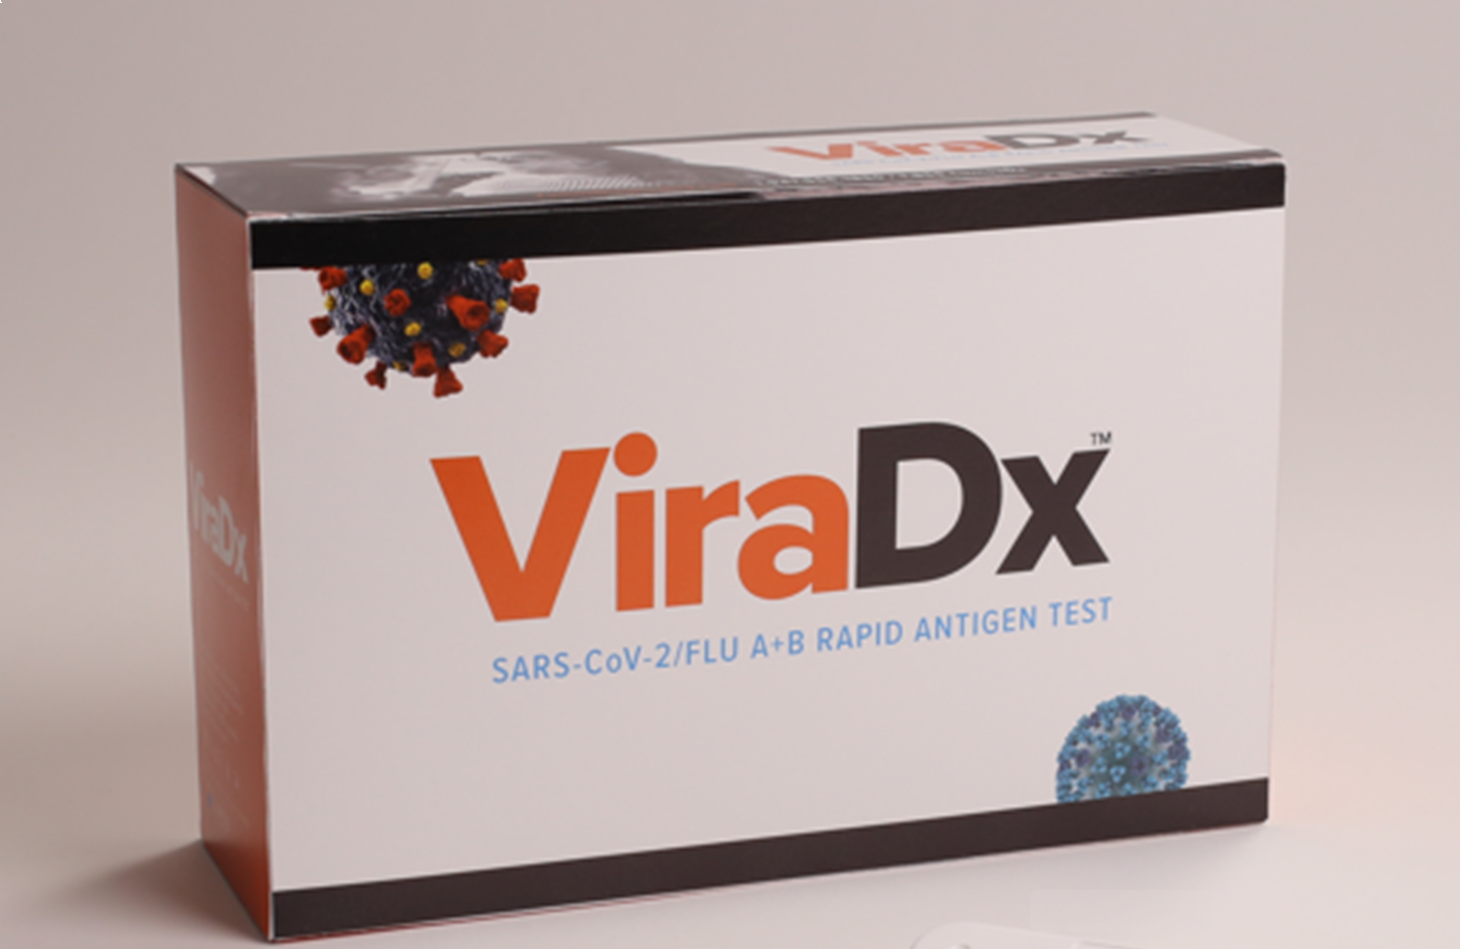 image of SARS-CoV-2/Flu A+B Rapid Antigen Test